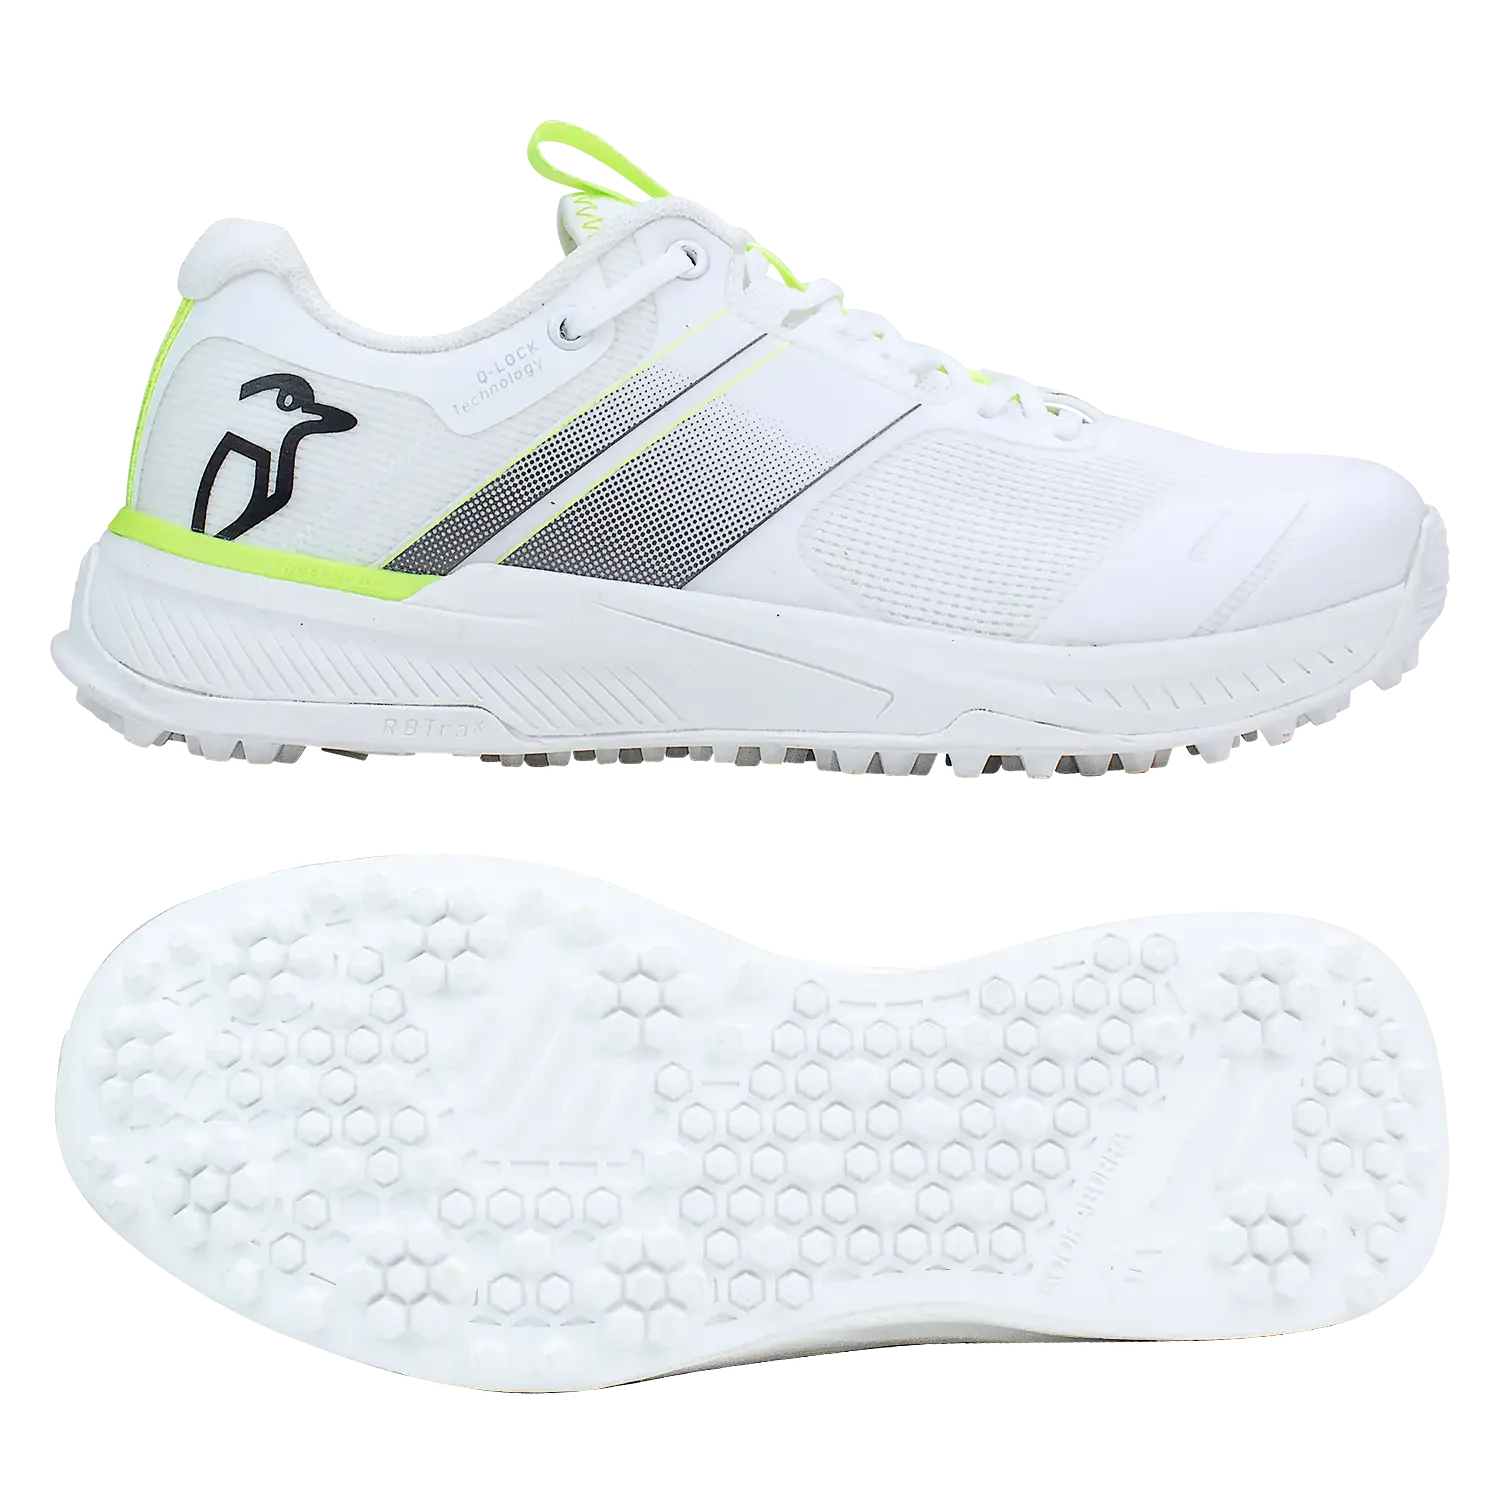 Kookaburra KC Players Rubber Sole Cricket Shoes - US 9 / White/Lime - FOOTWEAR - RUBBER SOLE